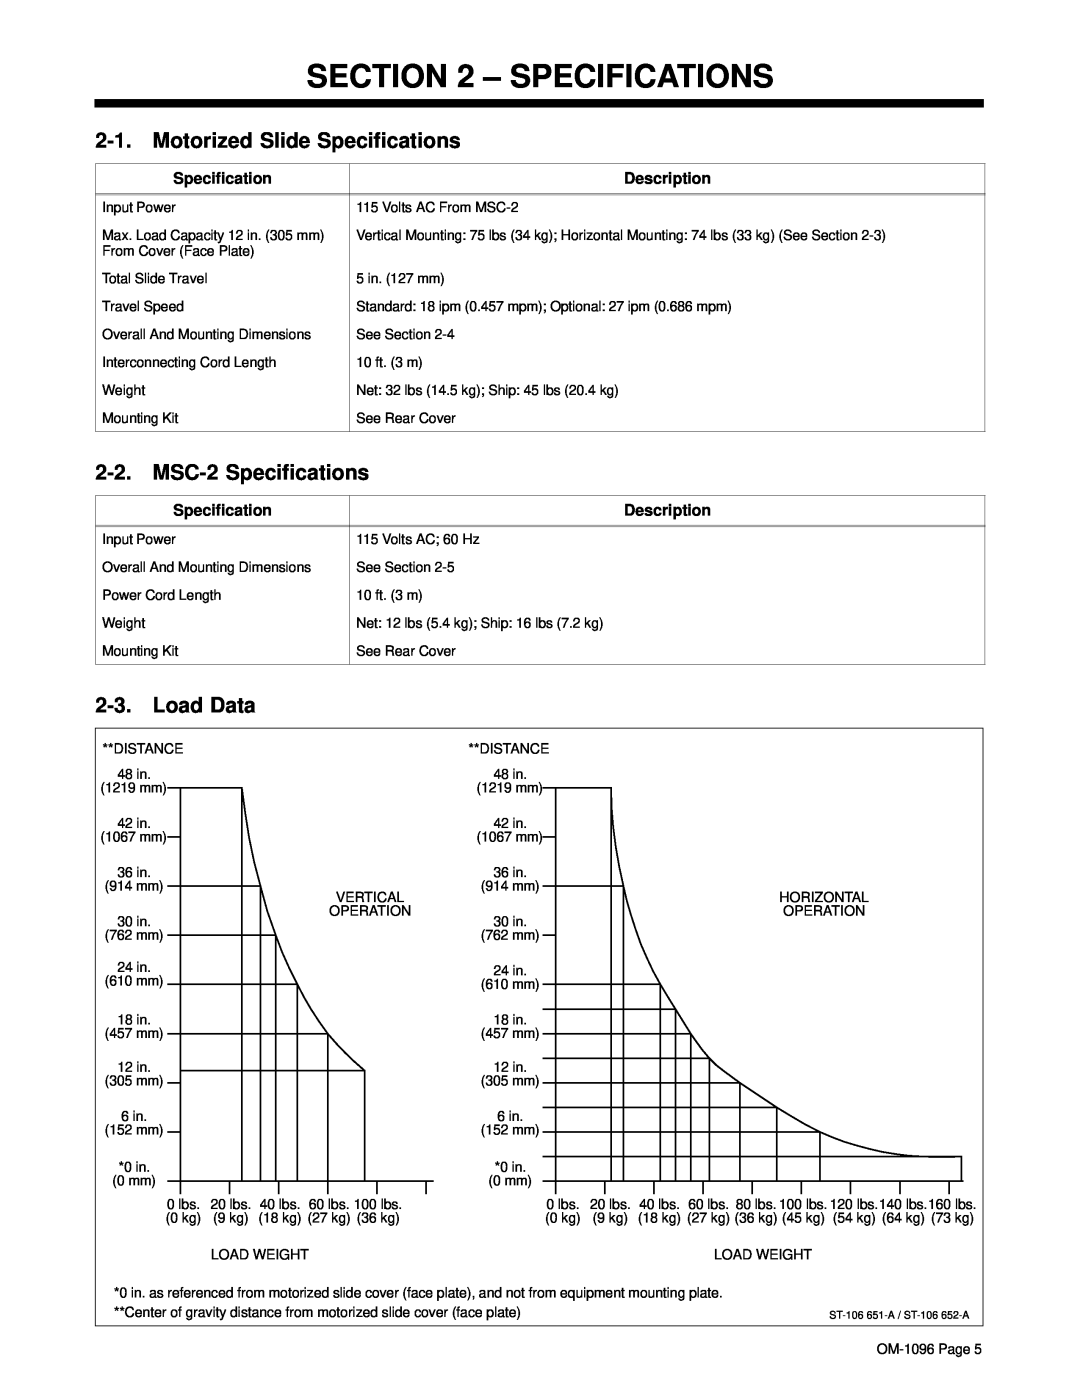 Miller Electric manual Motorized Slide Specifications, MSC-2 Specifications, Load Data, Description 